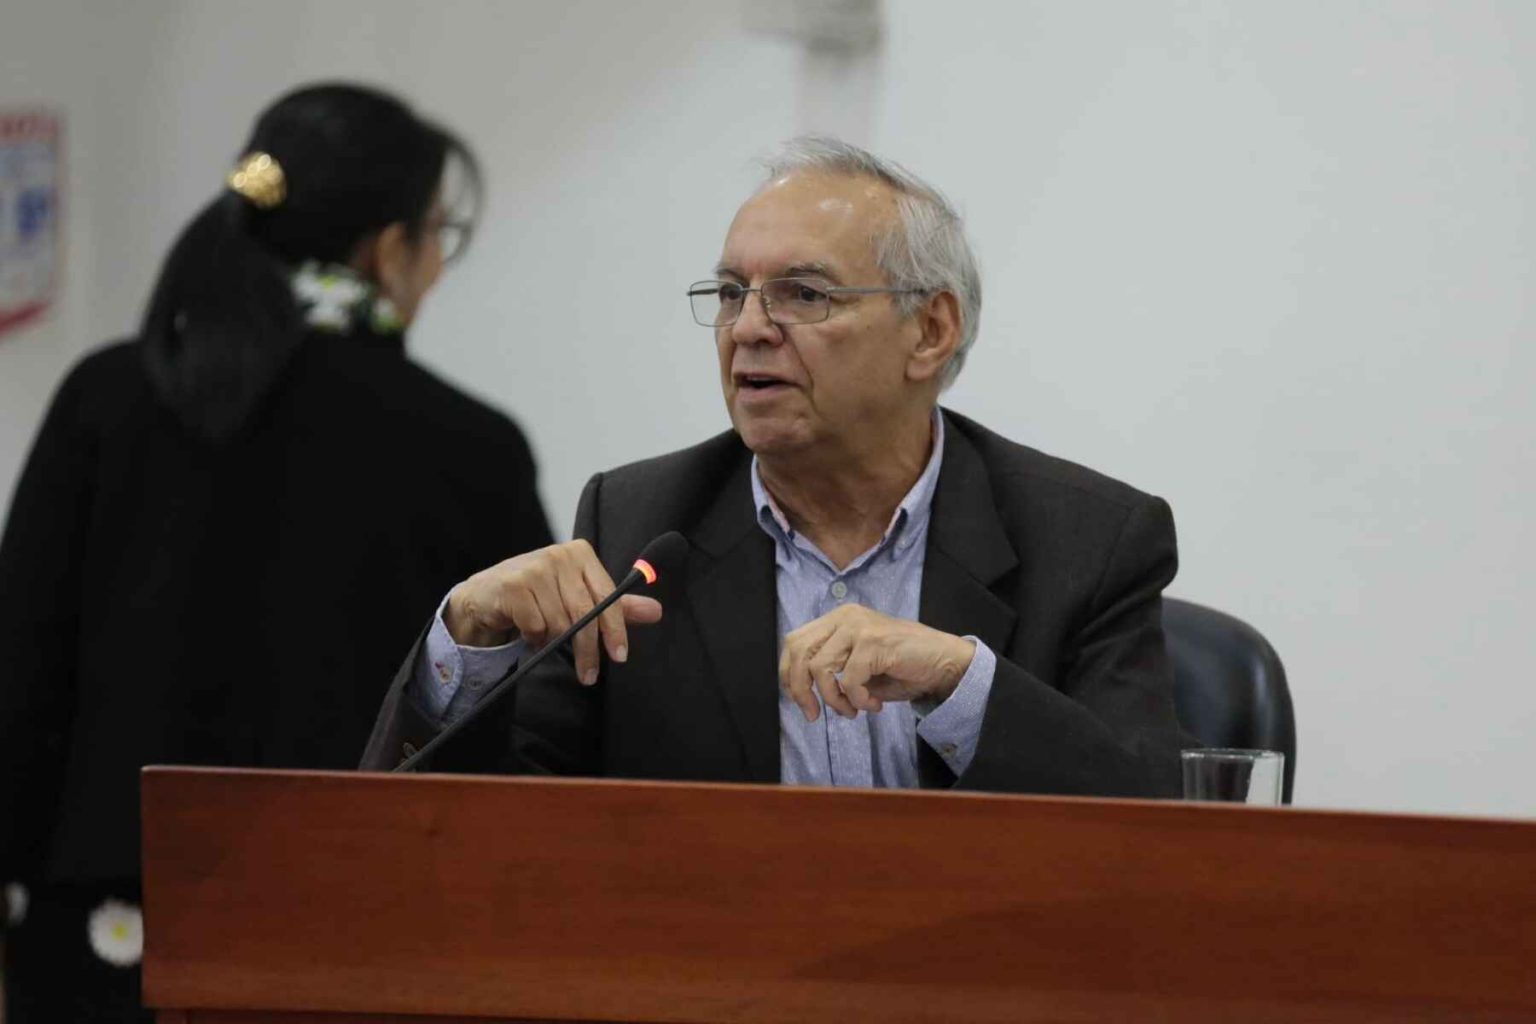 Ministerio de Hacienda Implementa Bloqueo Preventivo del Presupuesto Público colombiano